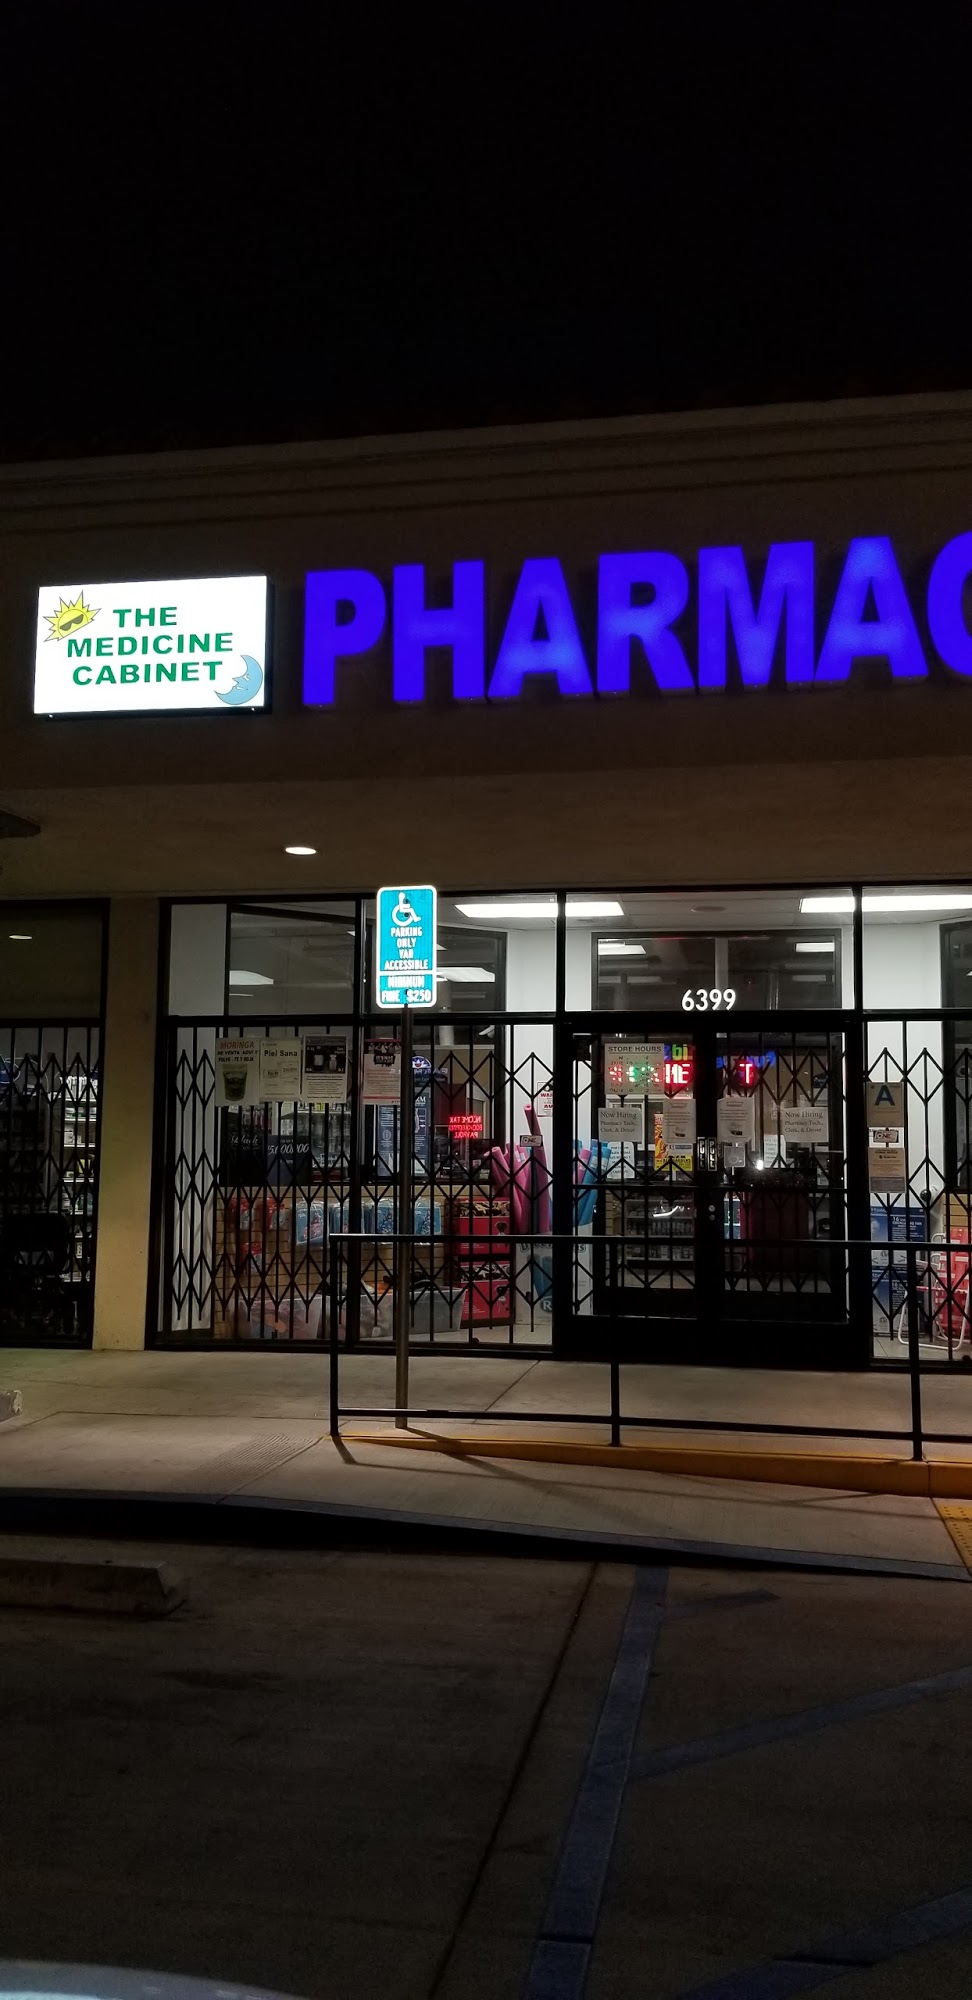 The Medicine Cabinet Pharmacy